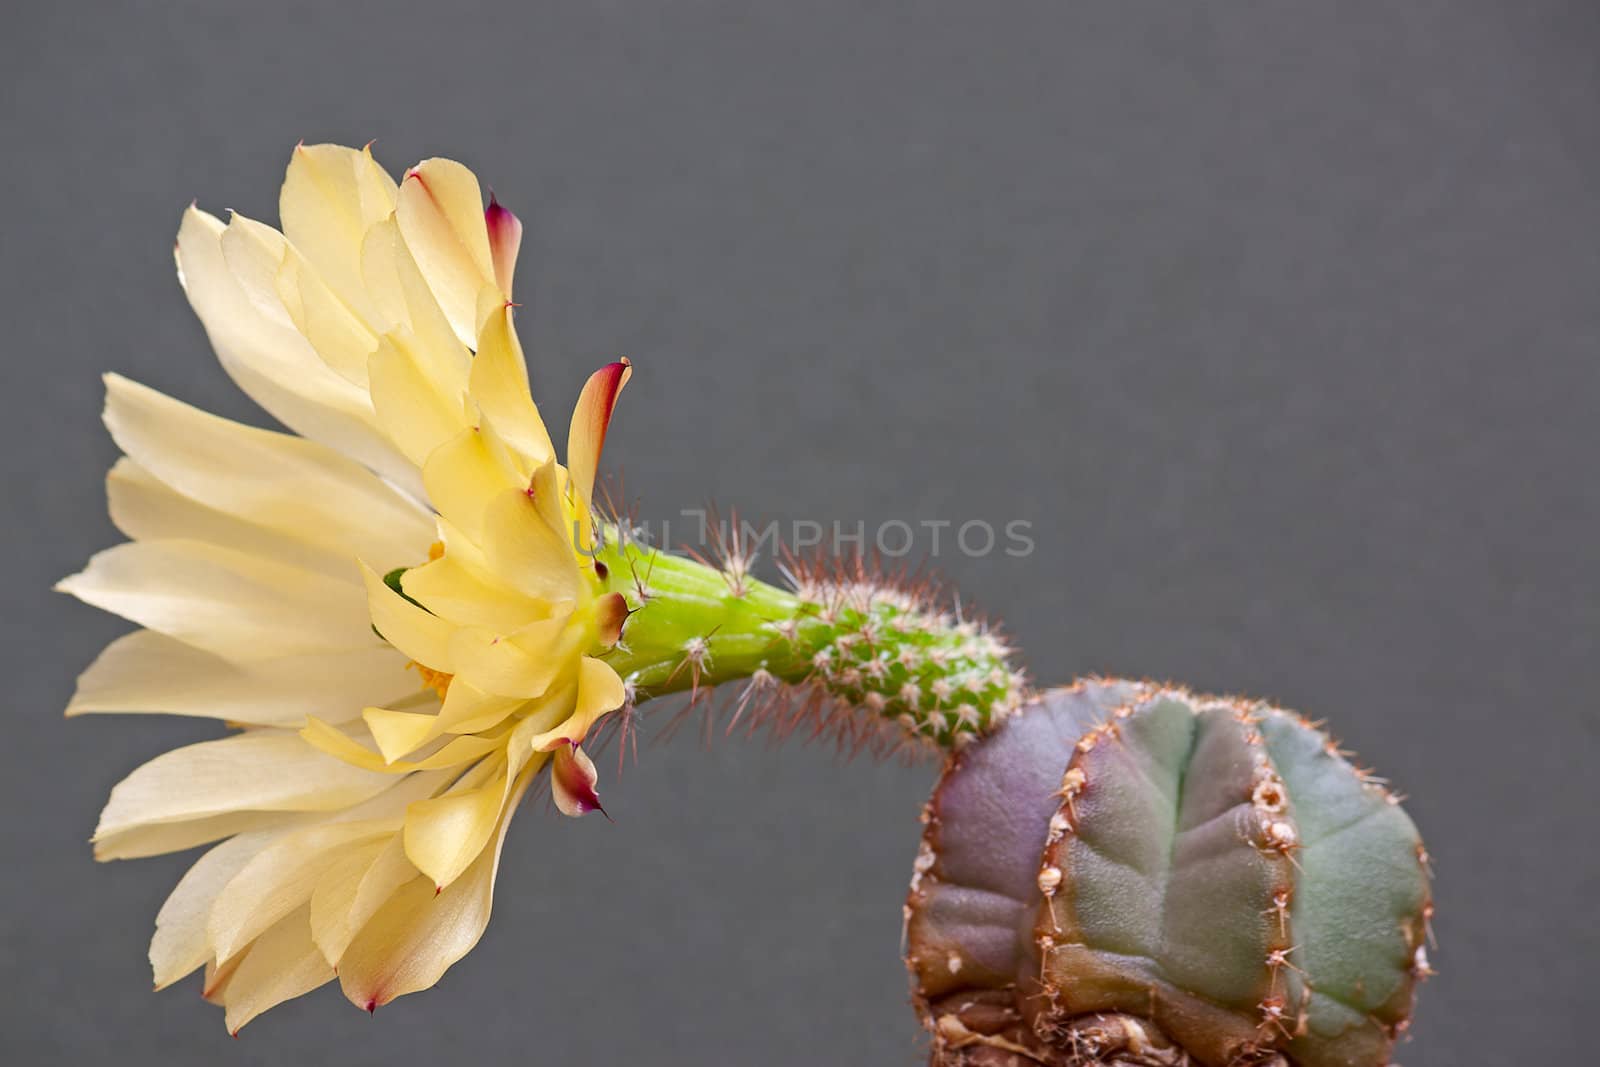 Cactus flower by zhannaprokopeva